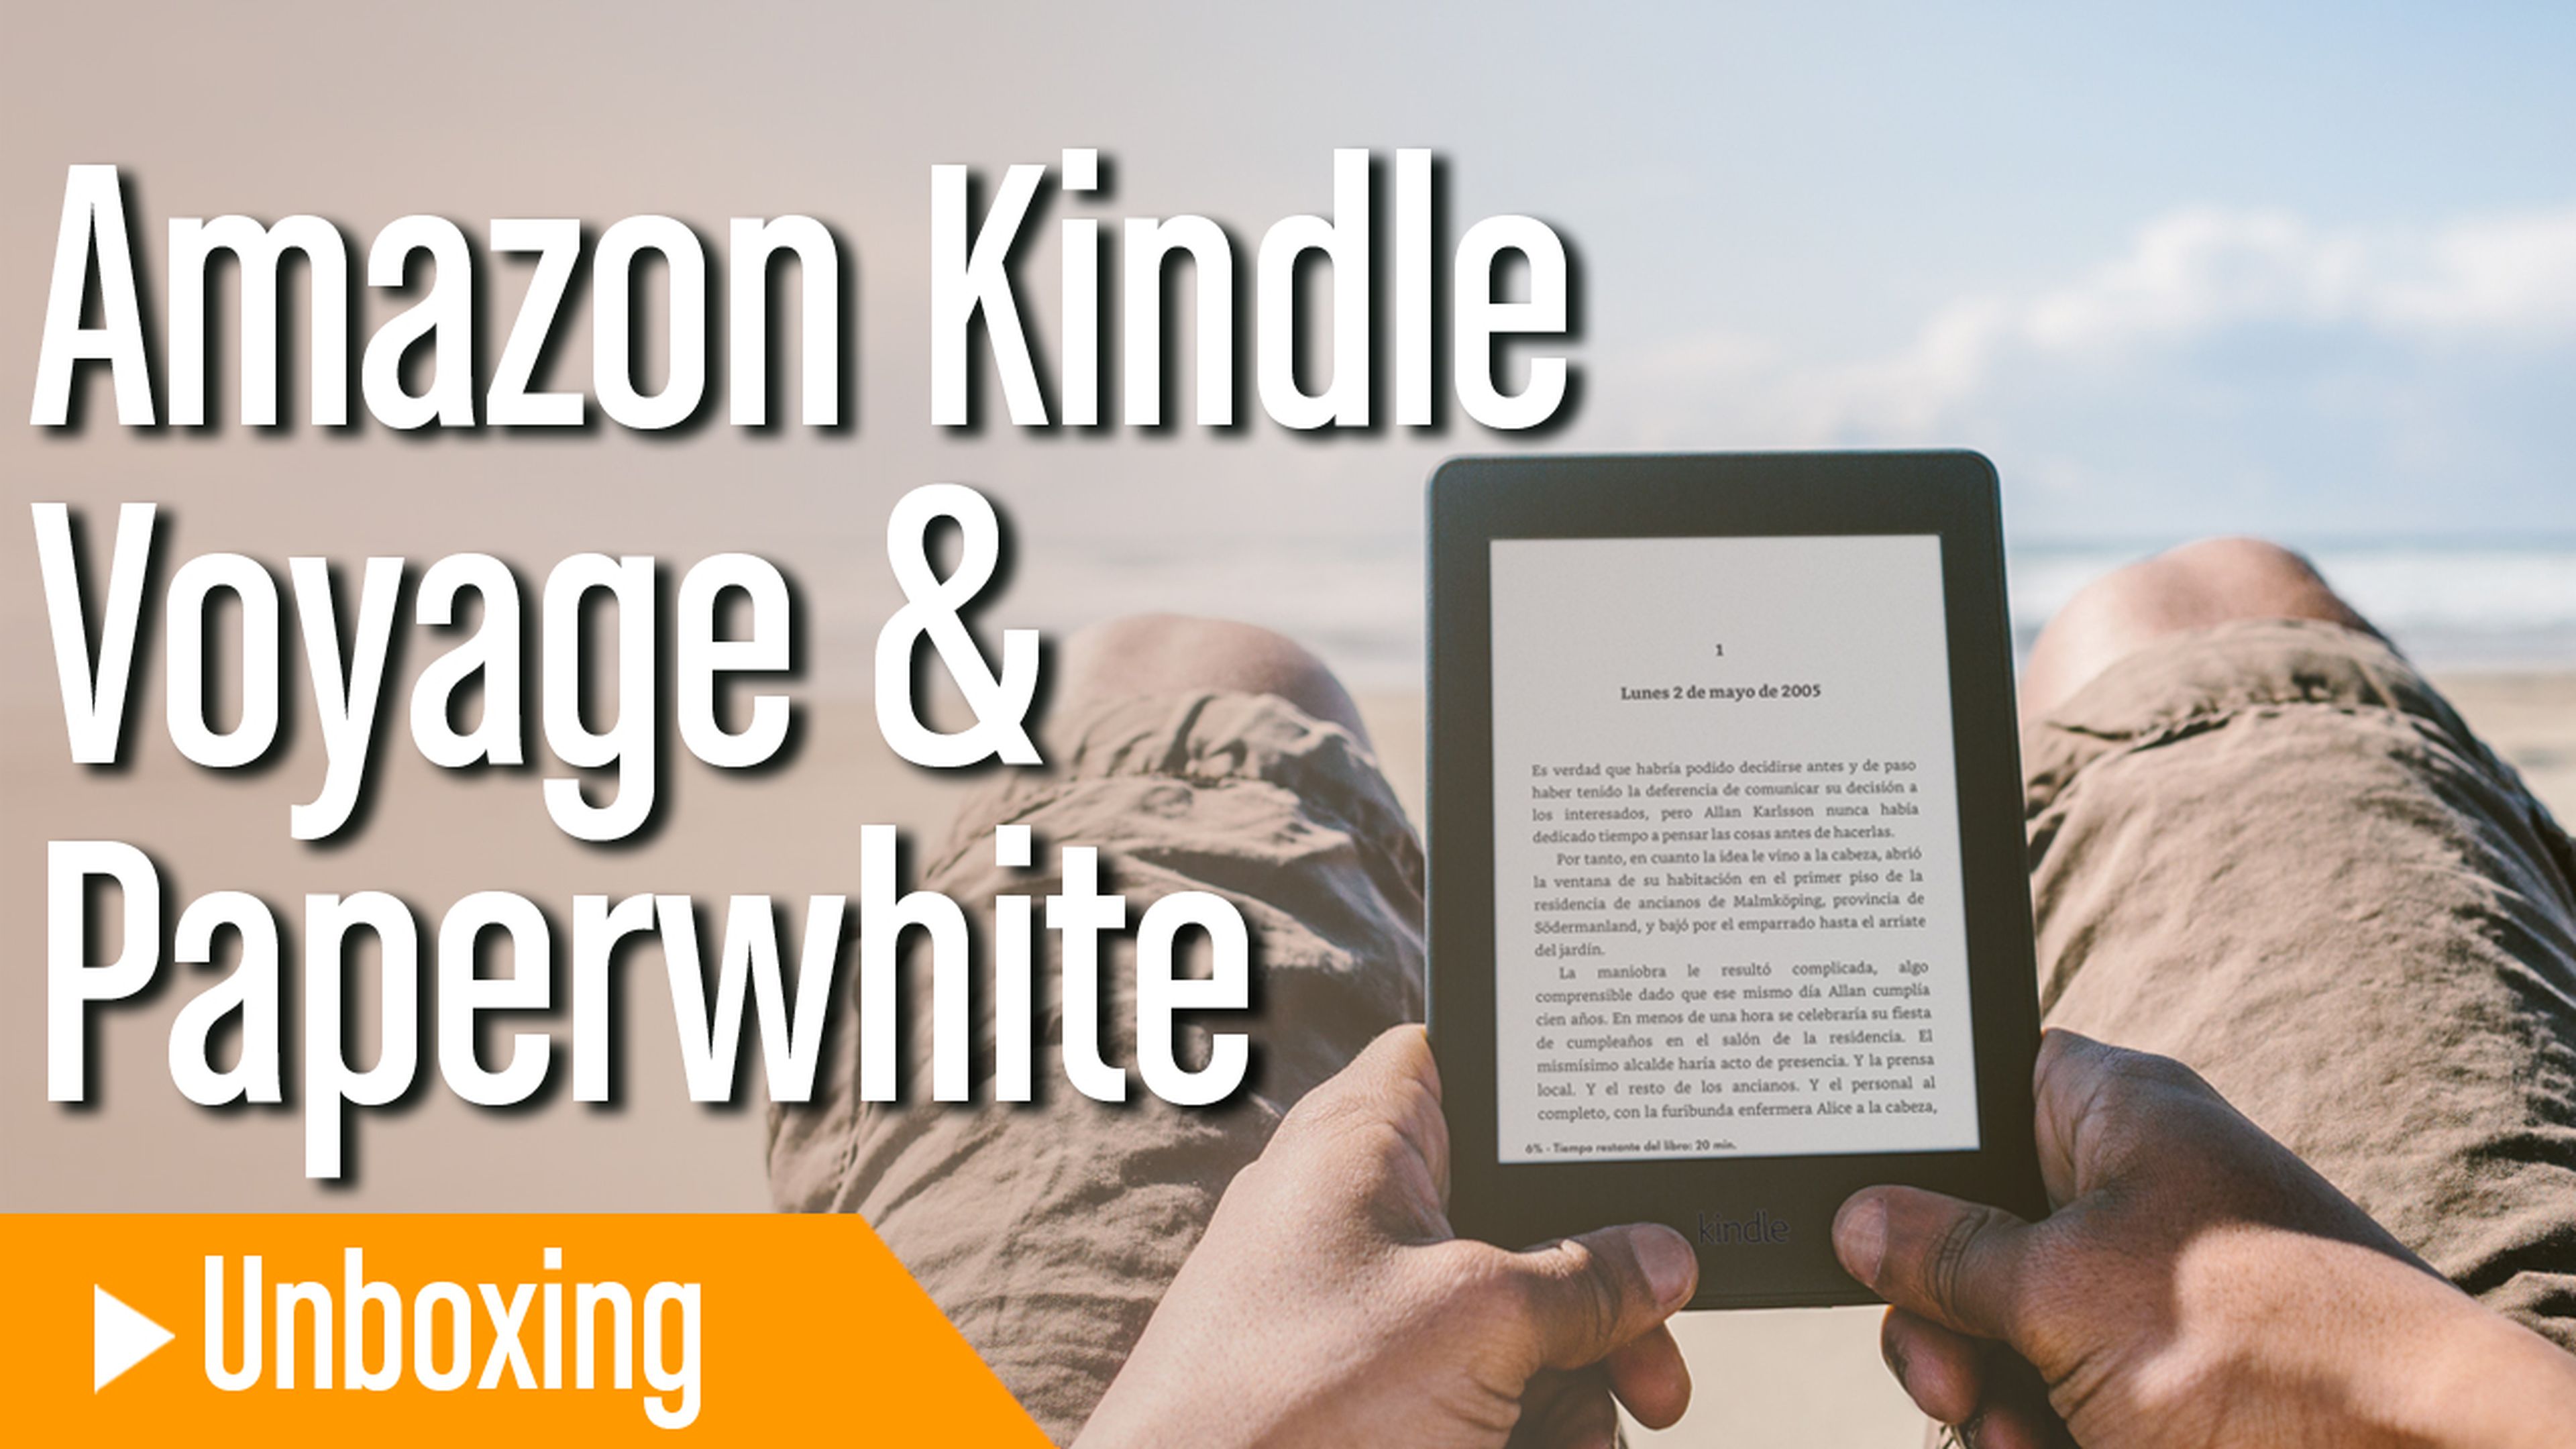 Amazon Kindle Voyage & Paperwhite